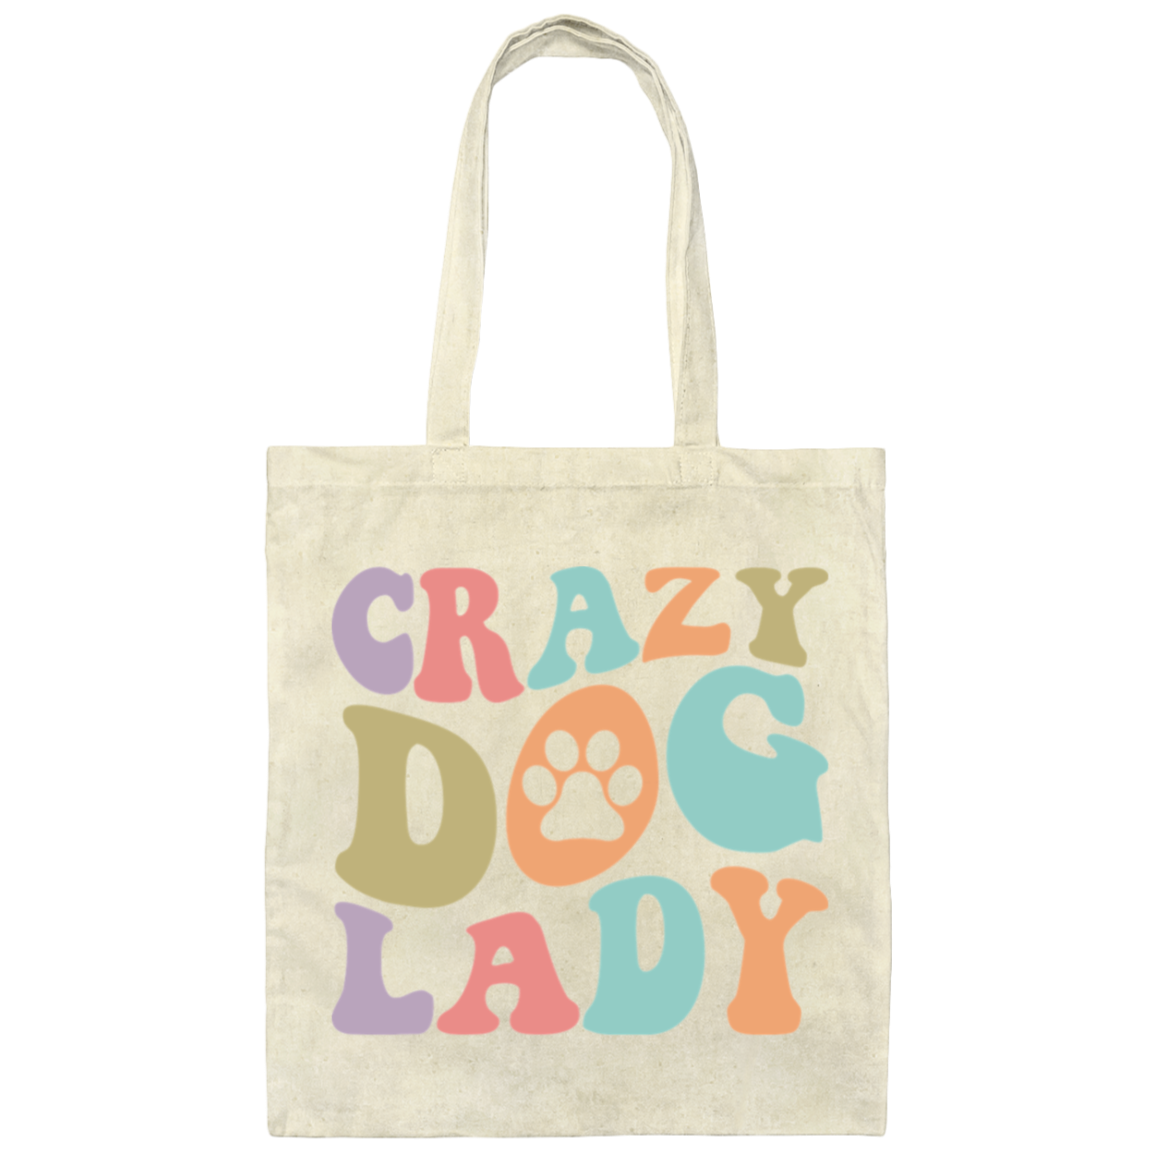 Crazy Dog Lady Paw Print Canvas Tote Bag